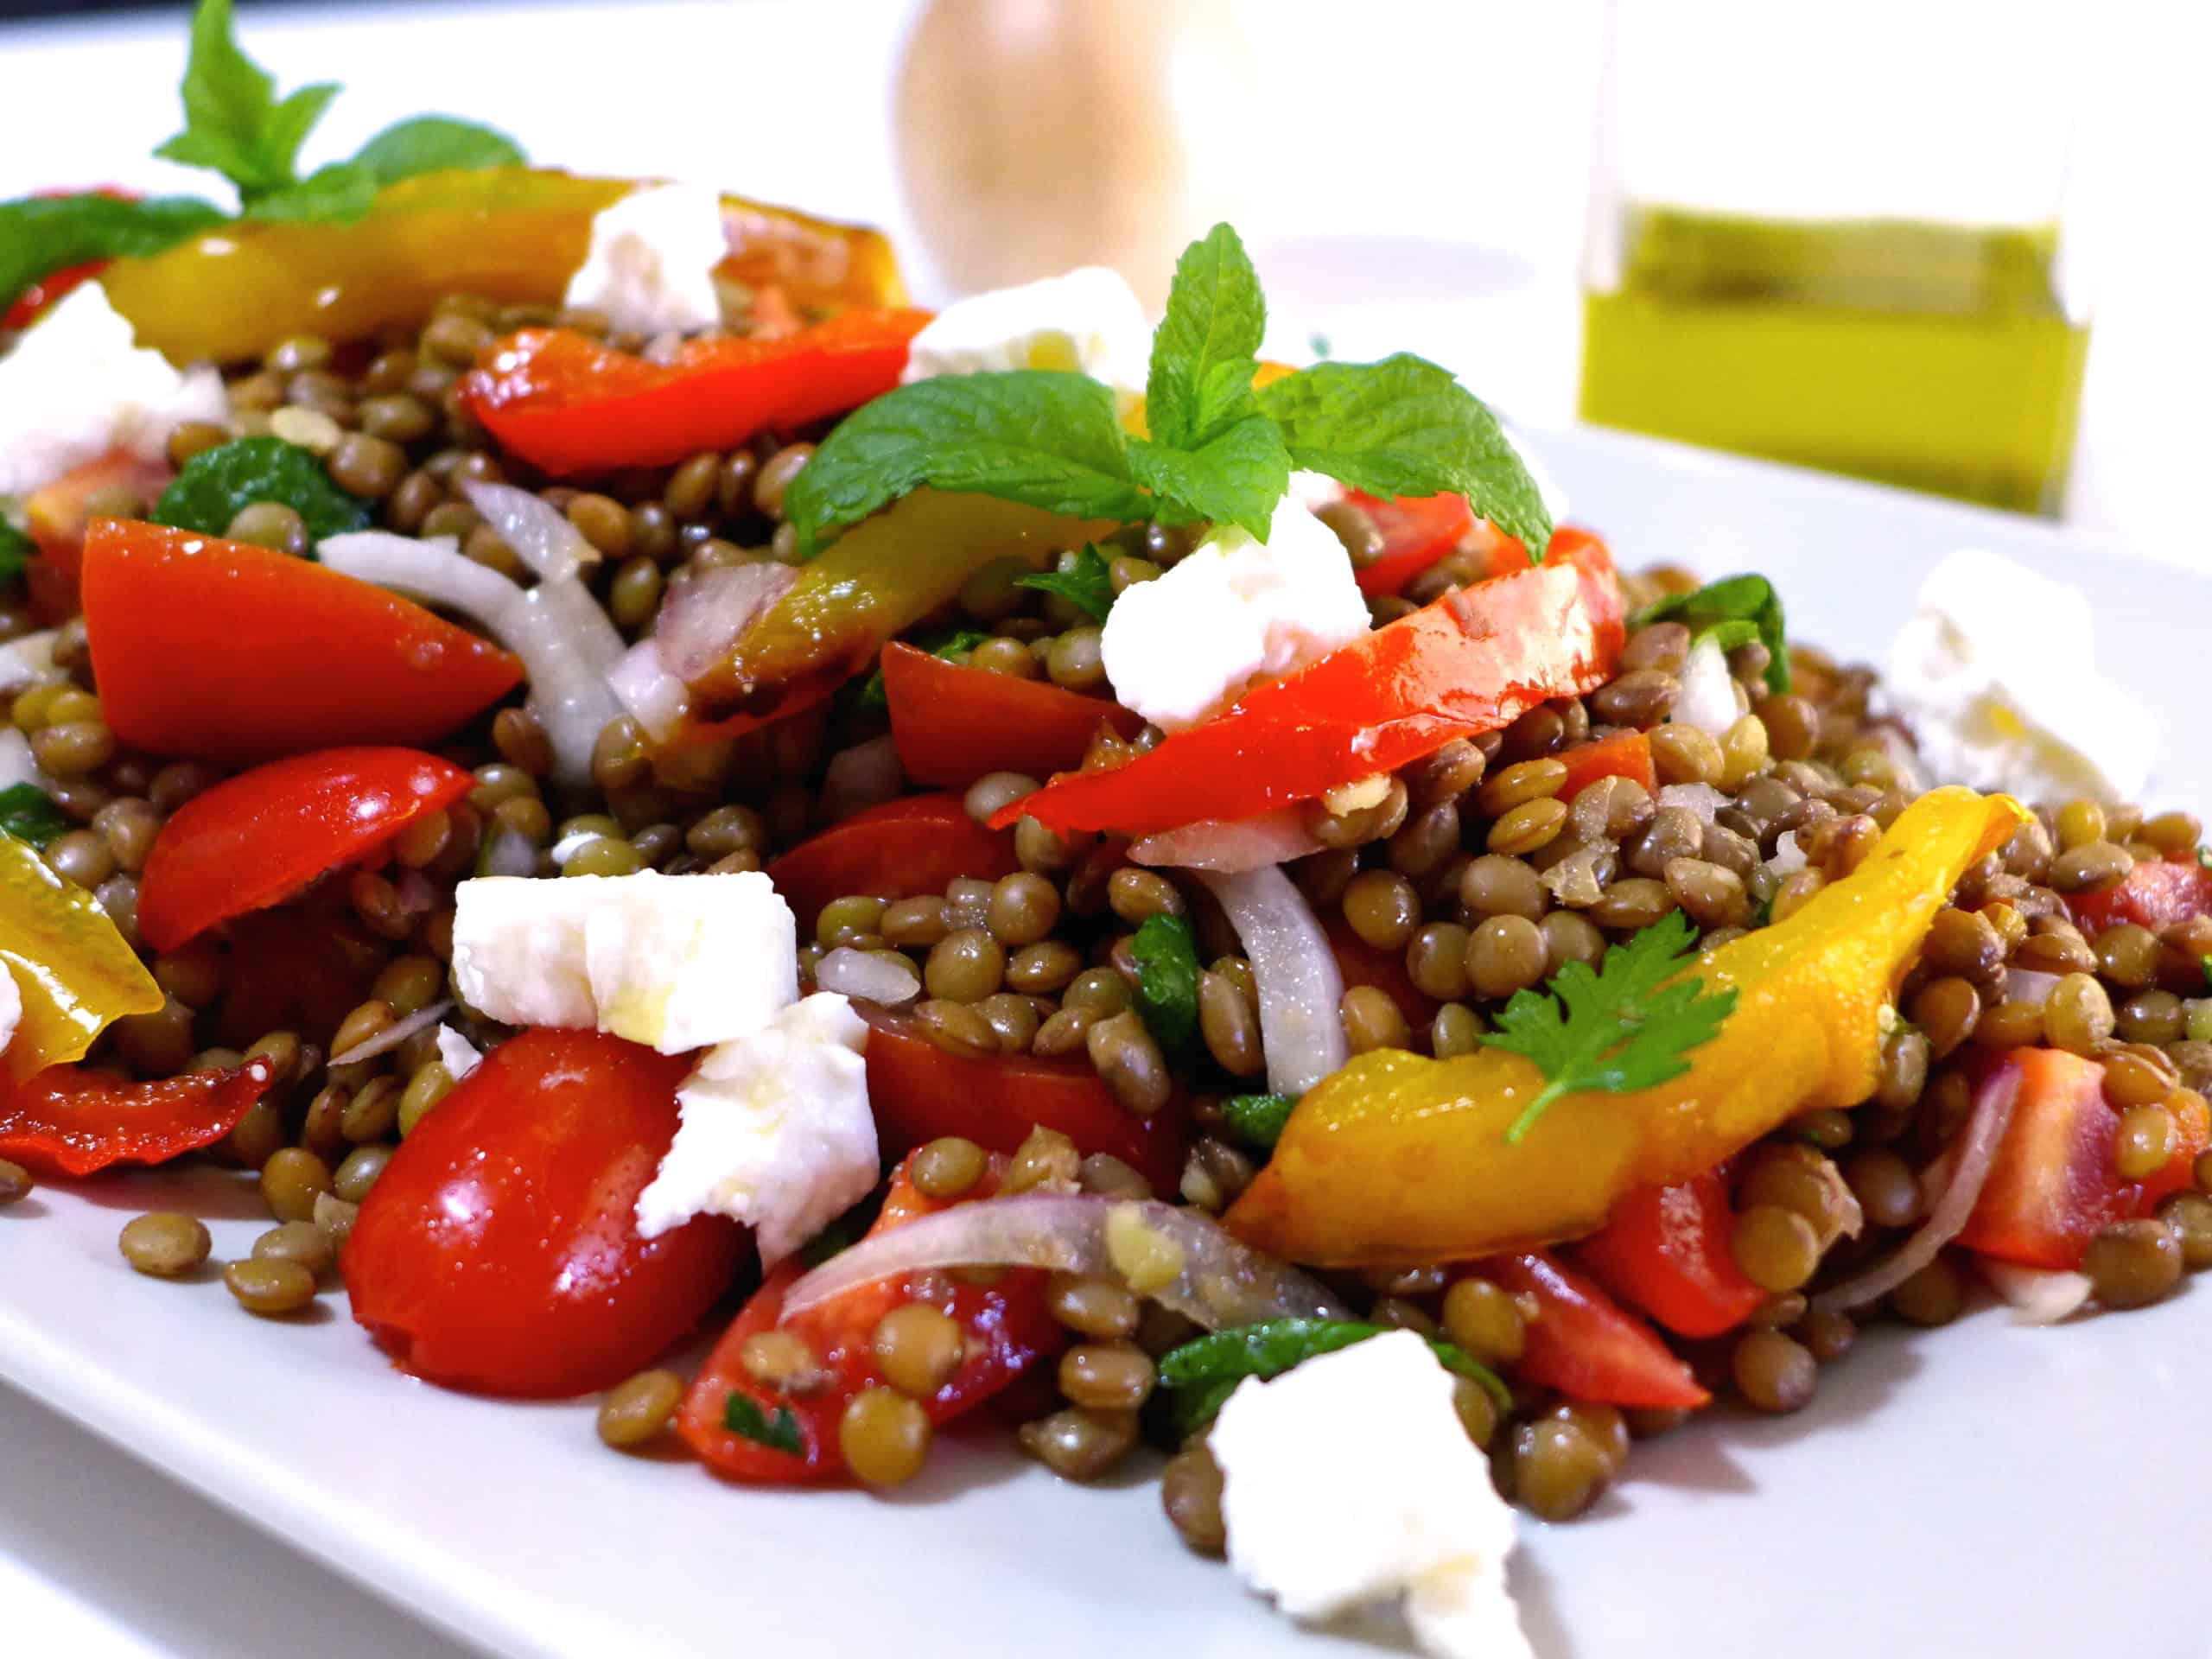 Delicious Greek Lentil Salad Recipe with Feta cheese (Fakes Salata)